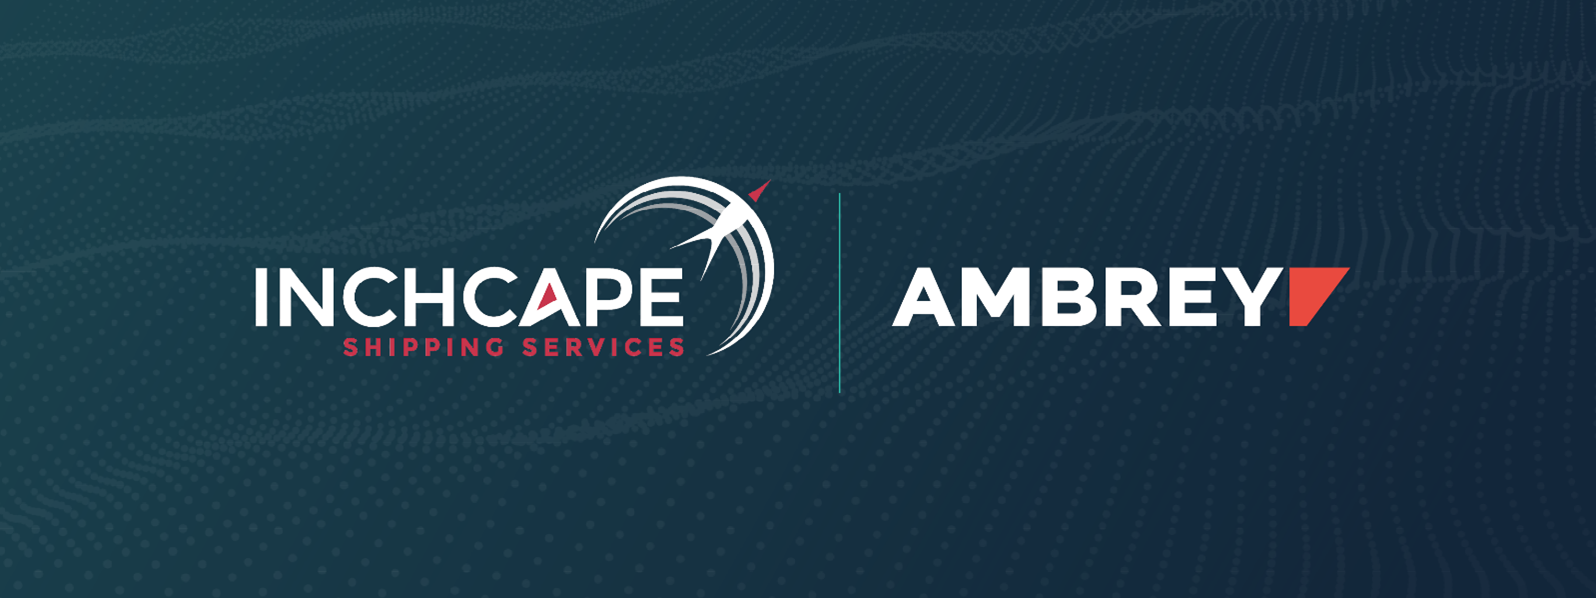 Inchcape and Ambrey Logo